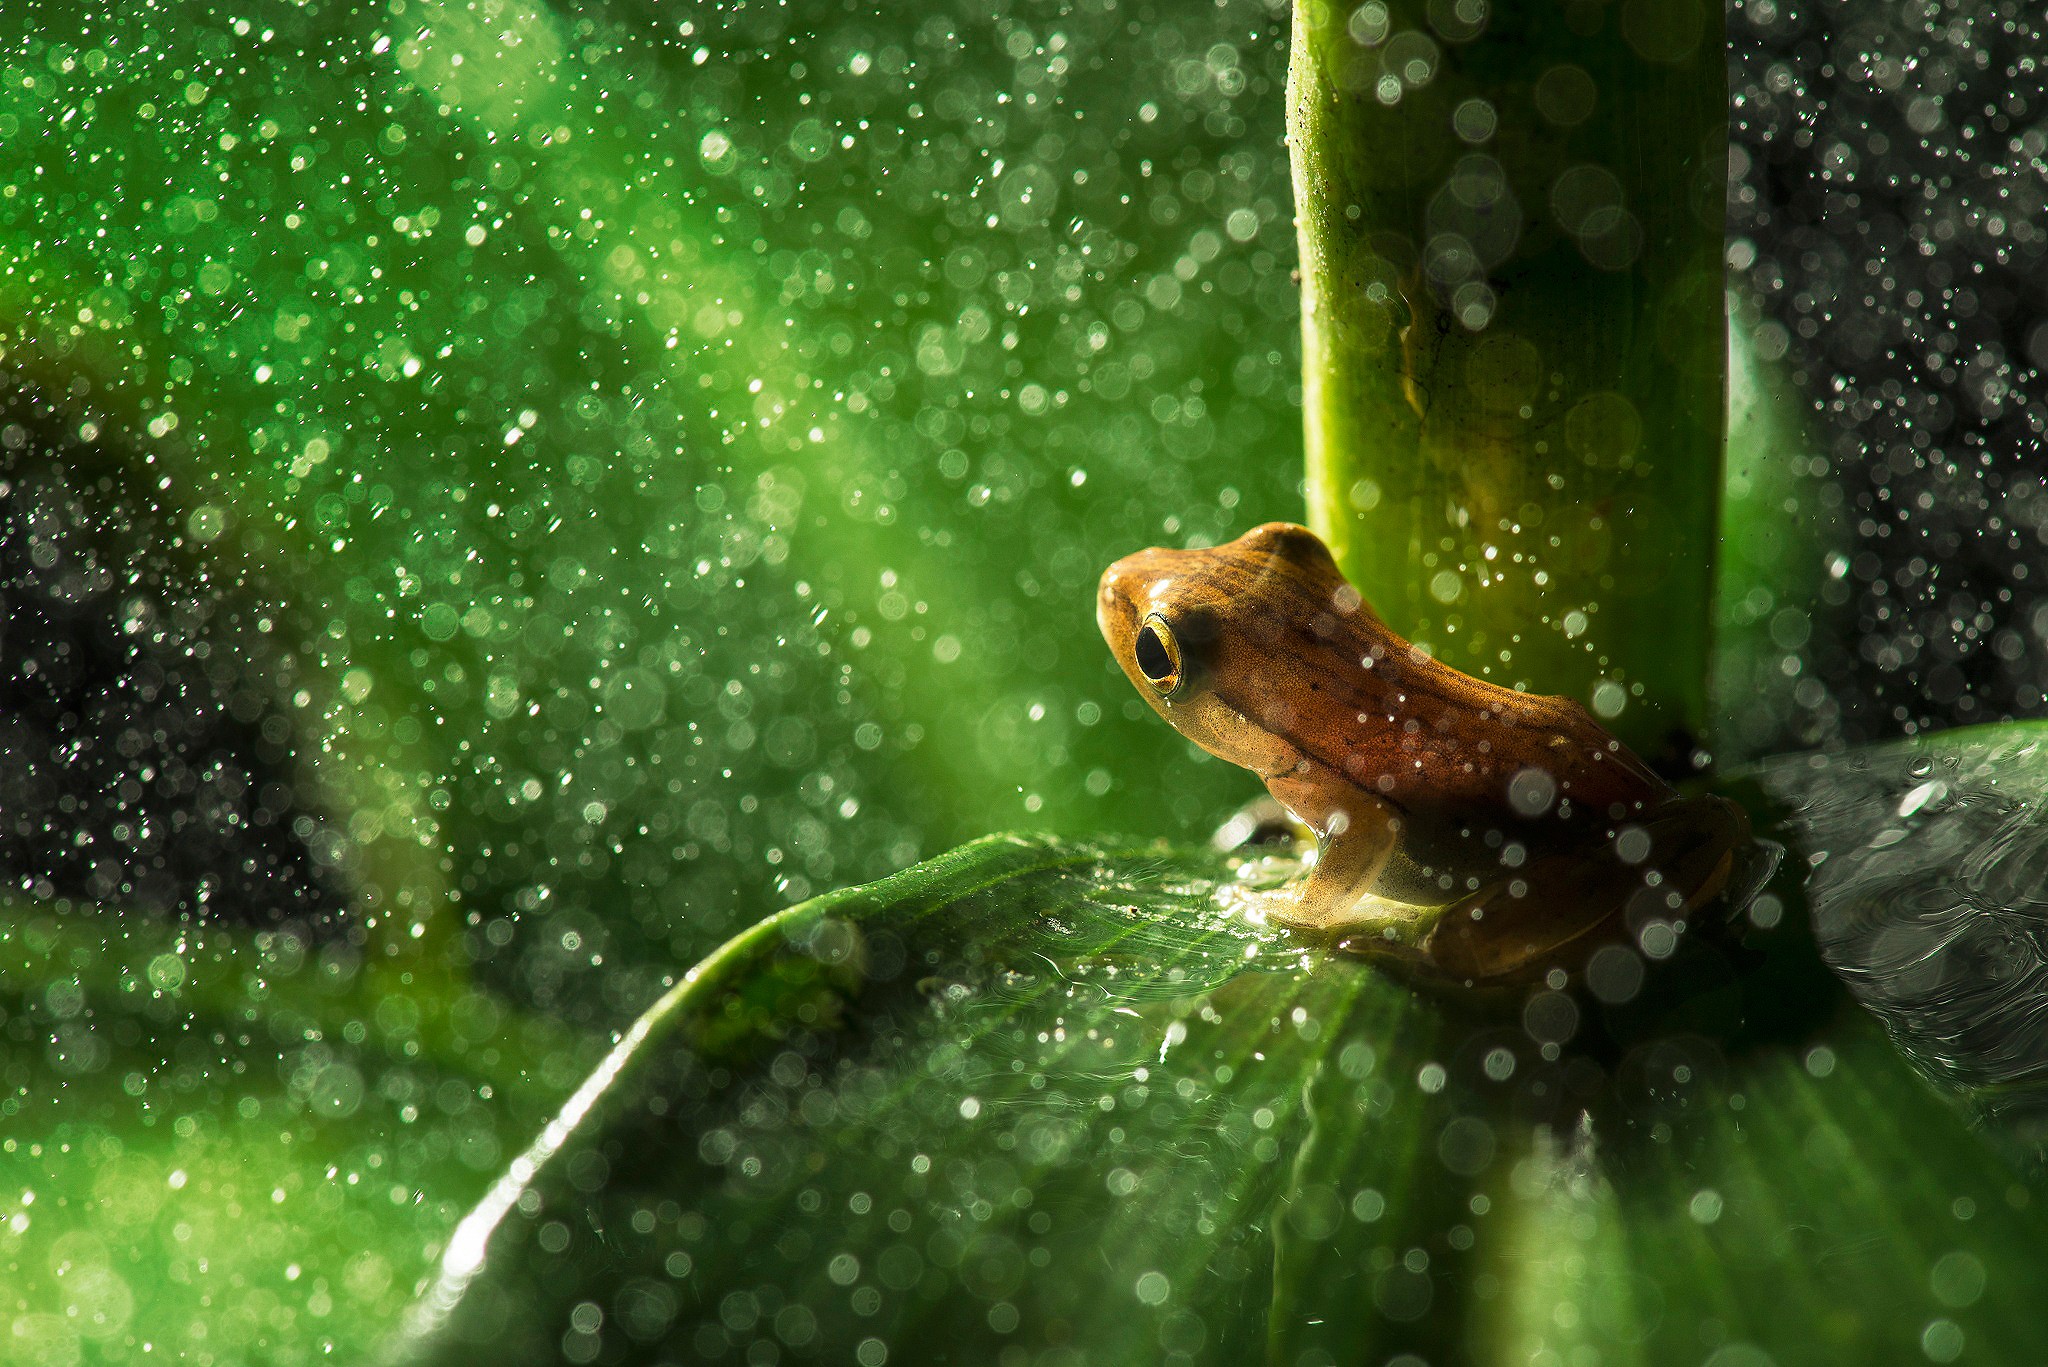 General 2048x1367 nature animals frog leaves macro rain water drops plants amphibian bokeh